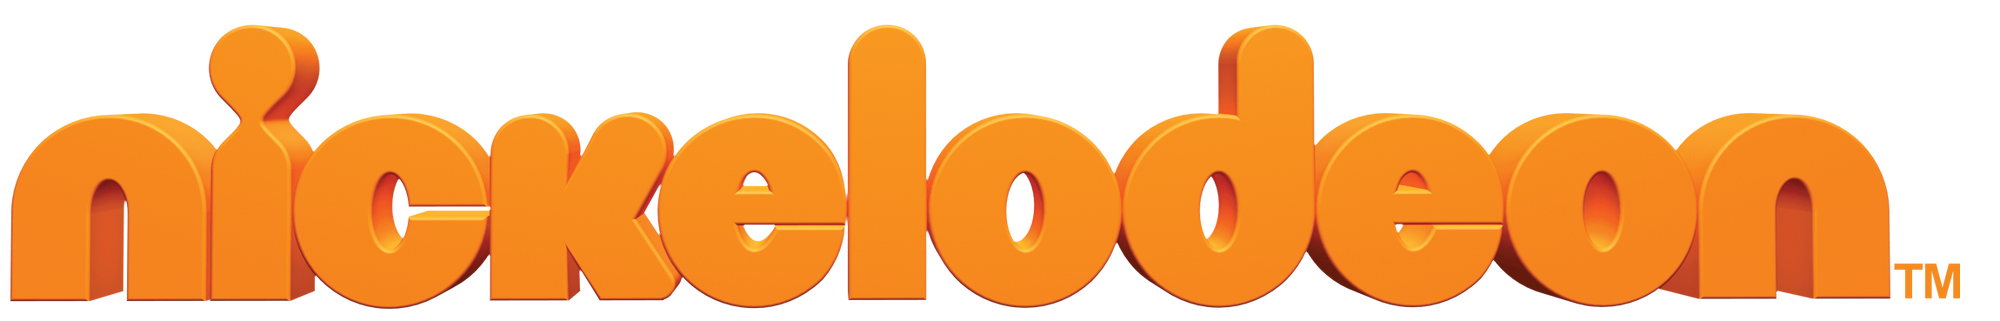 Nick channel. Логотип канала Nickelodeon. Никелодеон логотип 2009. Телеканал Nick логотип. Nickelodeon канал старый логотип.